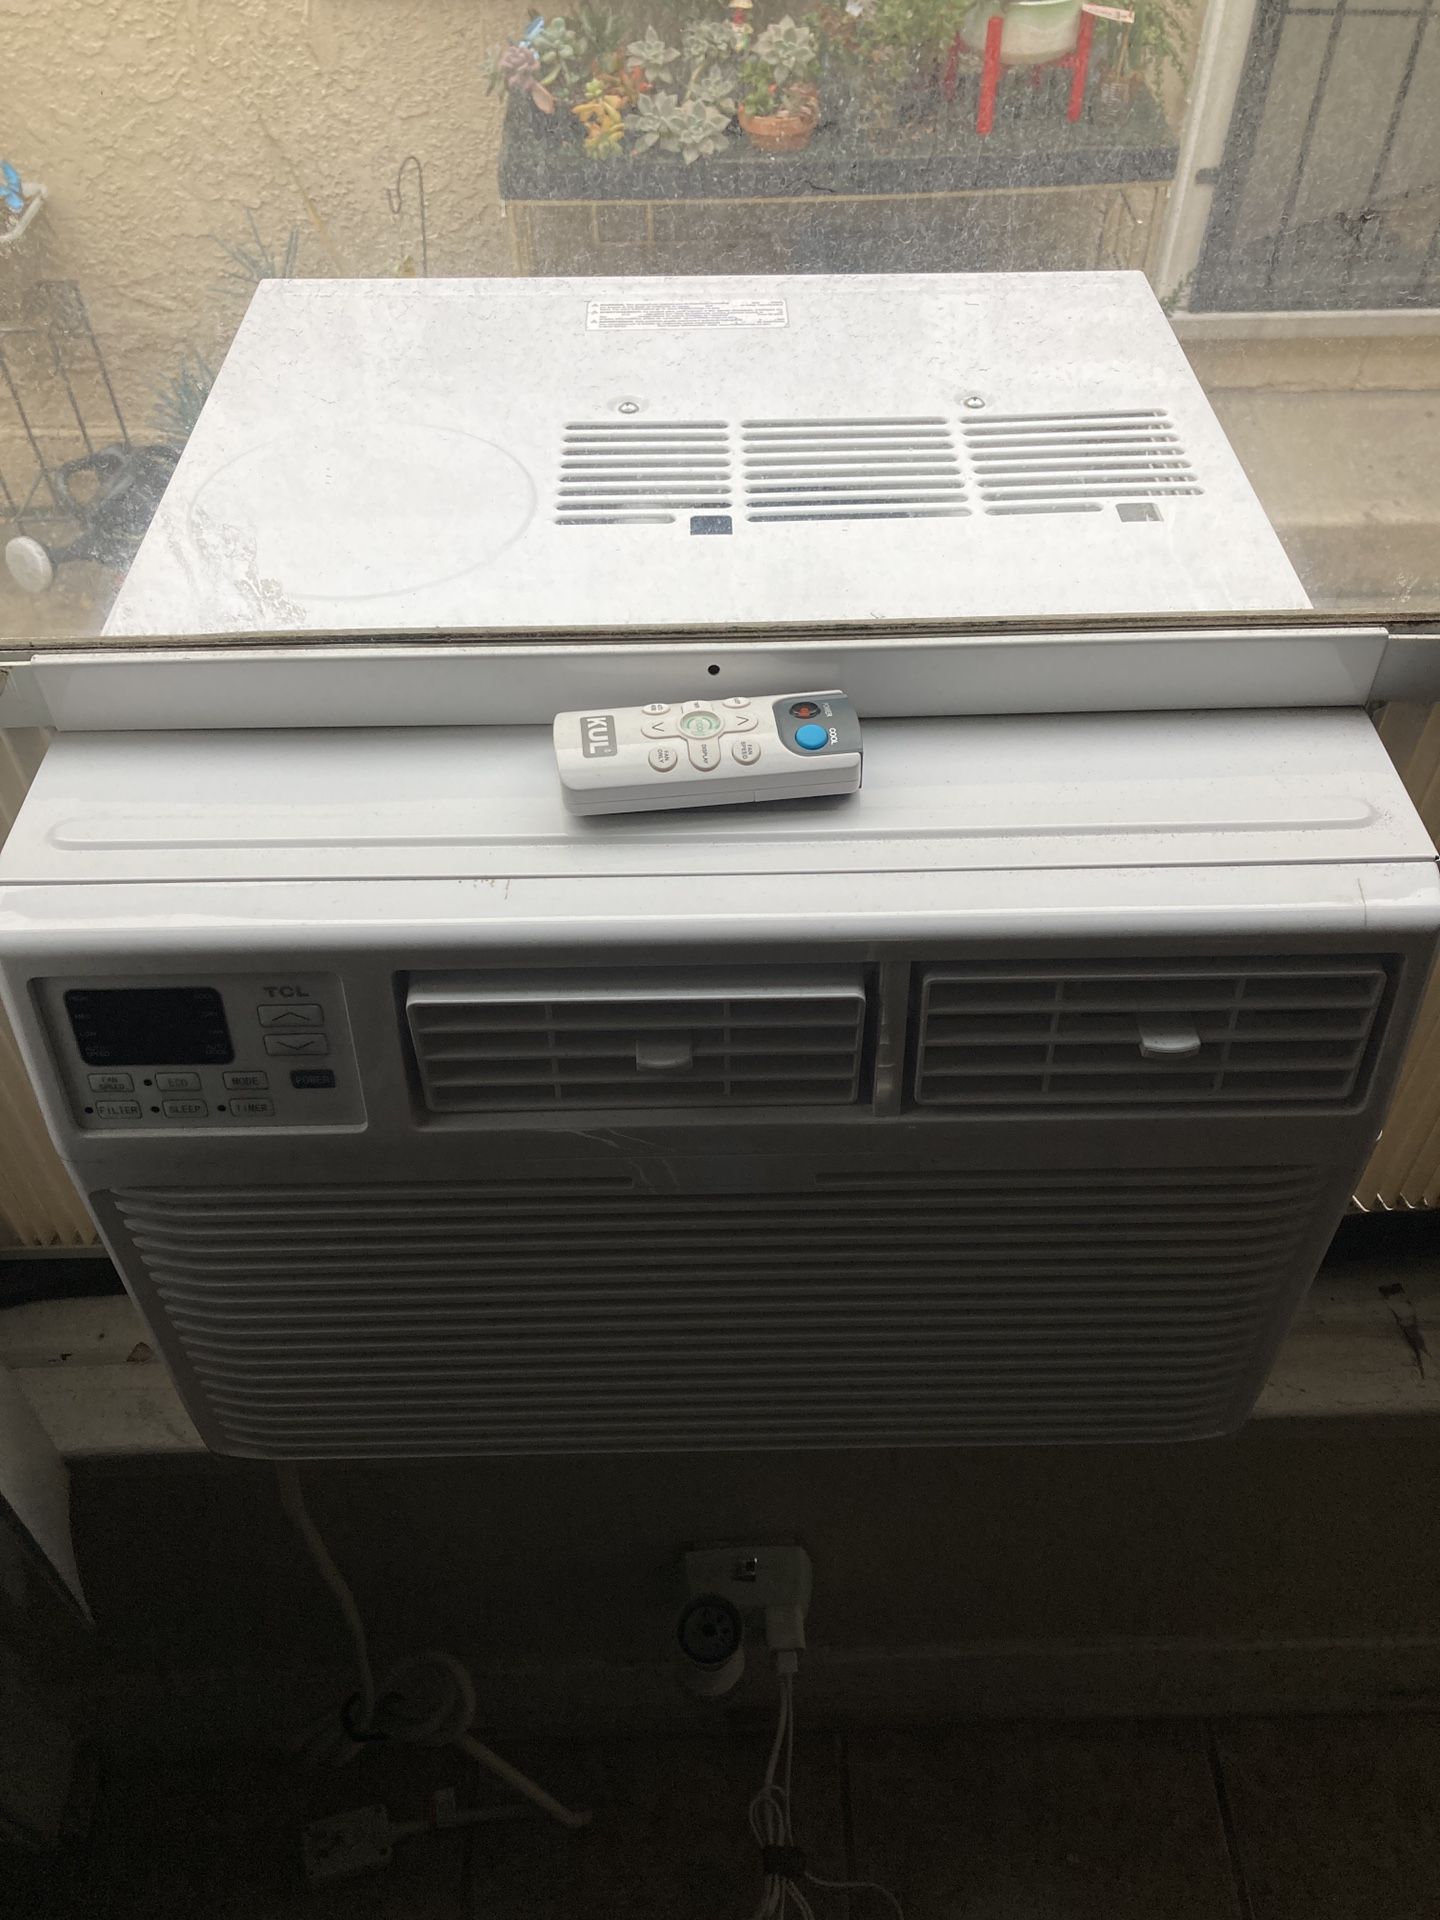 TCL 12,000 BTU window-air-conditioner